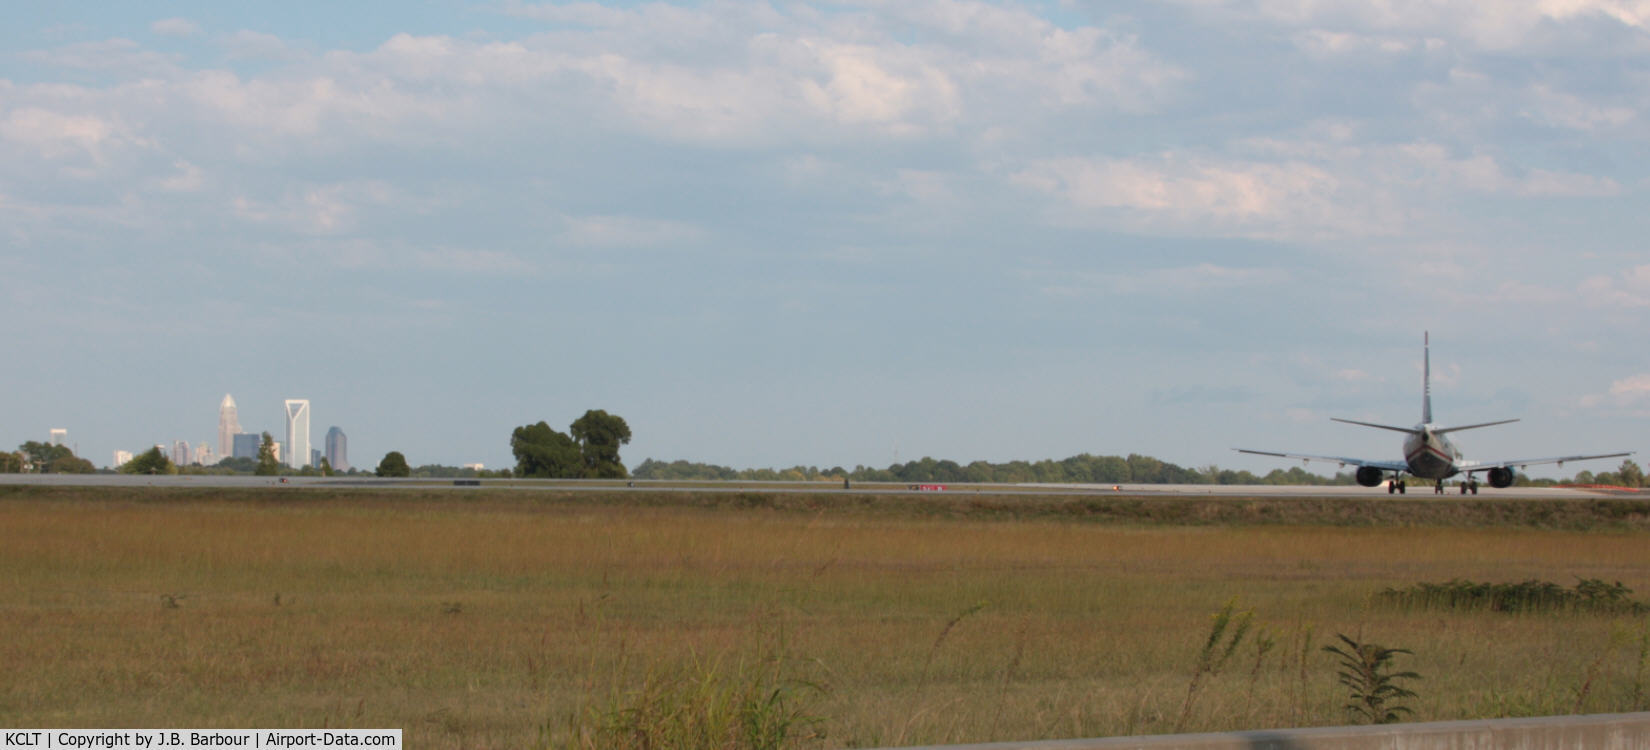 Charlotte/douglas International Airport (CLT) - Overlooking runway 36R torwards the city